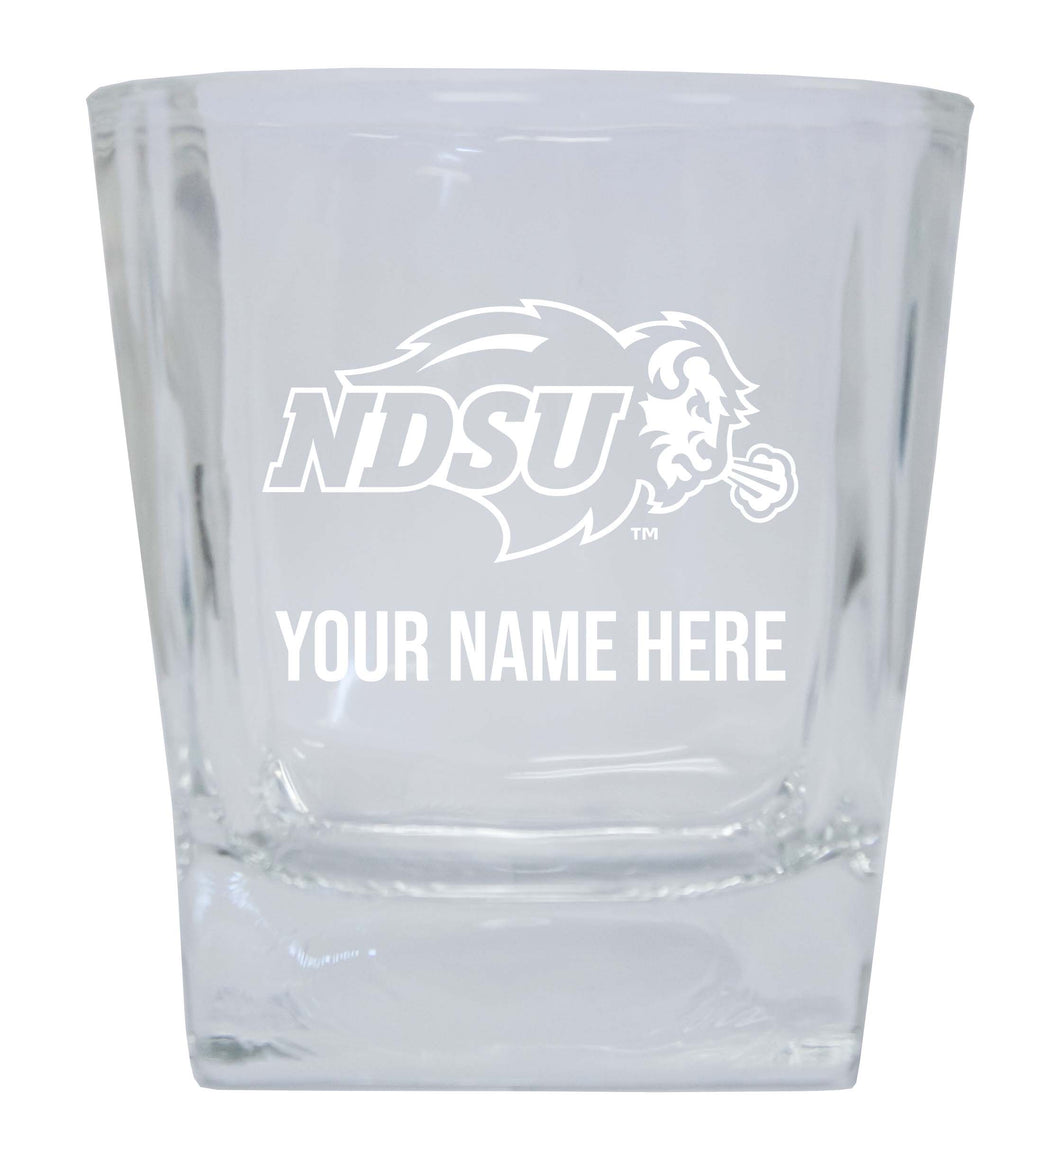 North Dakota State Bison 2-Pack Personalized NCAA Spirit Elegance 10oz Etched Glass Tumbler